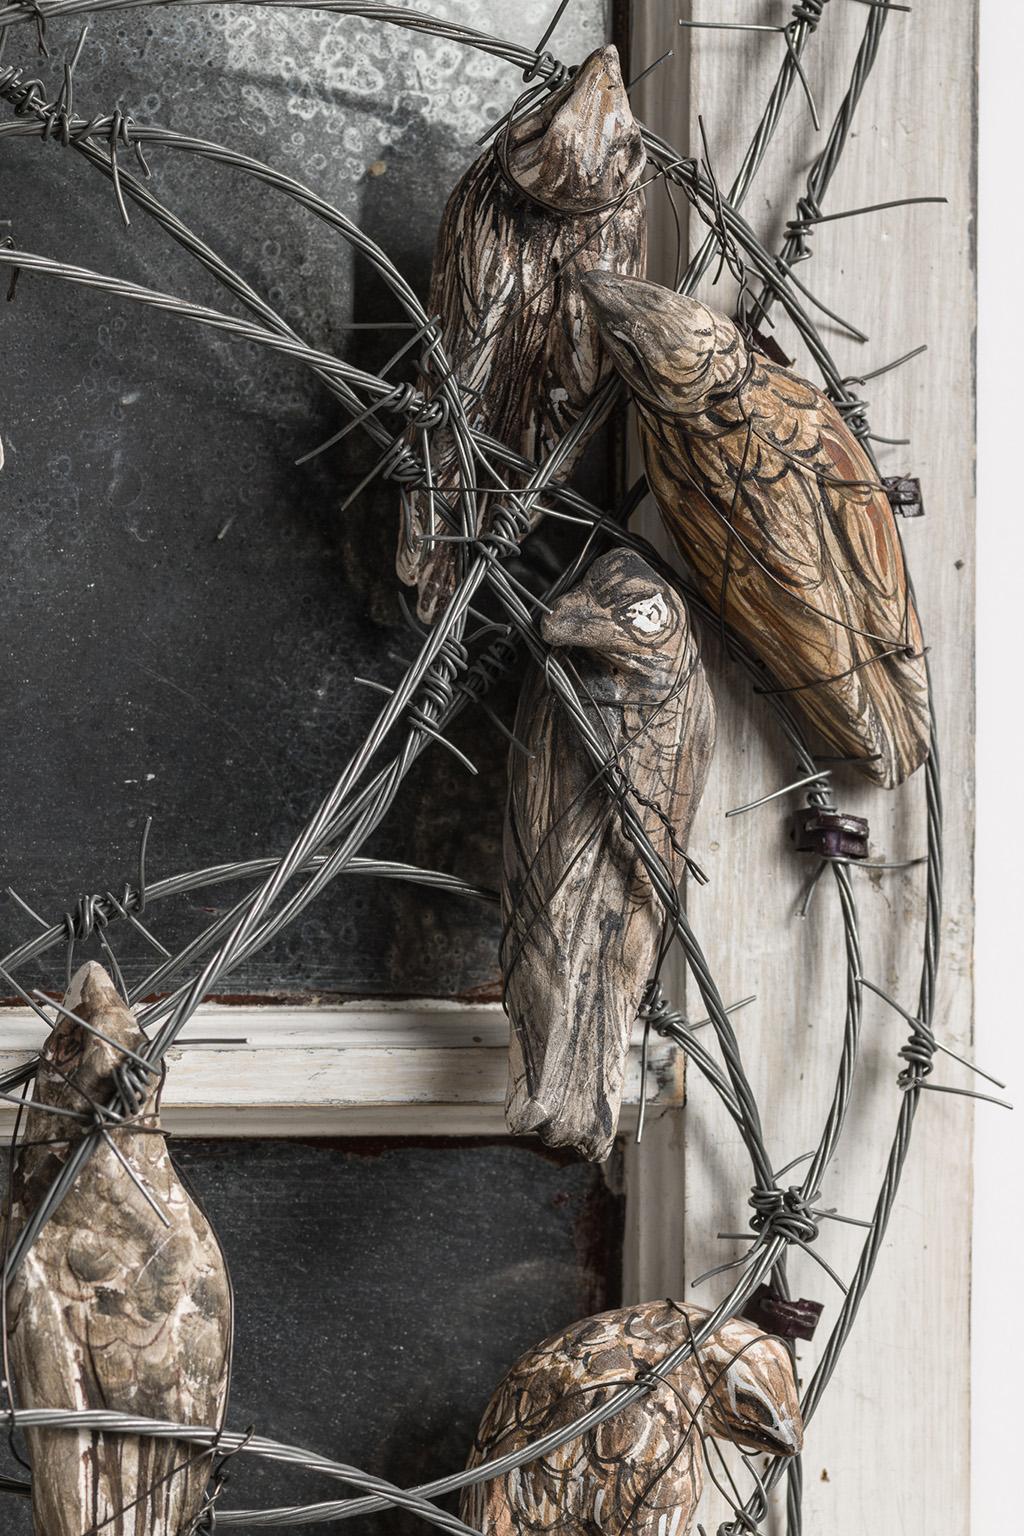 Window Frame with Birds & Barbwire: 'Wren Day' - Sculpture by Elizabeth Jordan